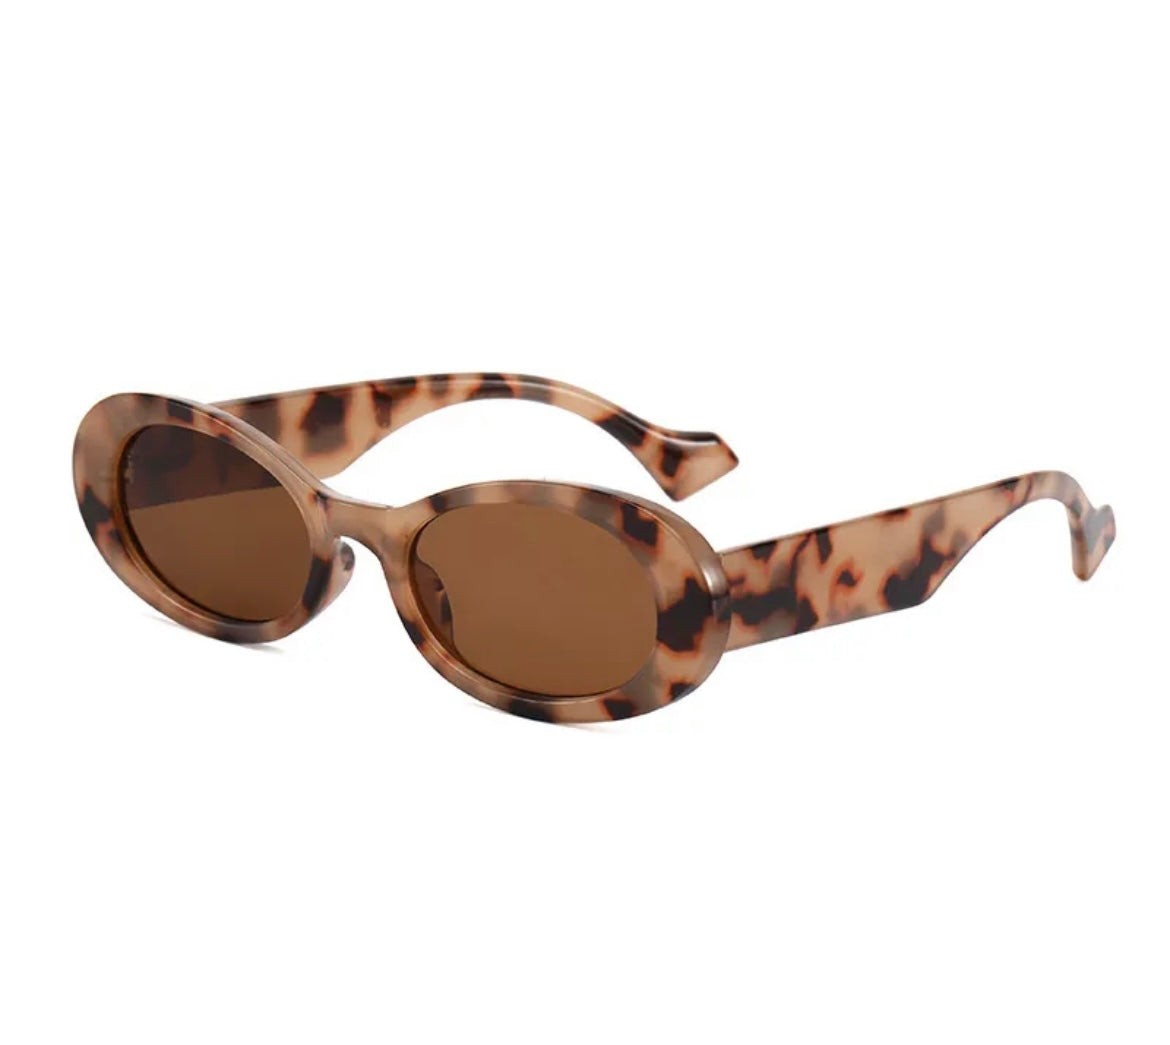 Chloé sunglasses